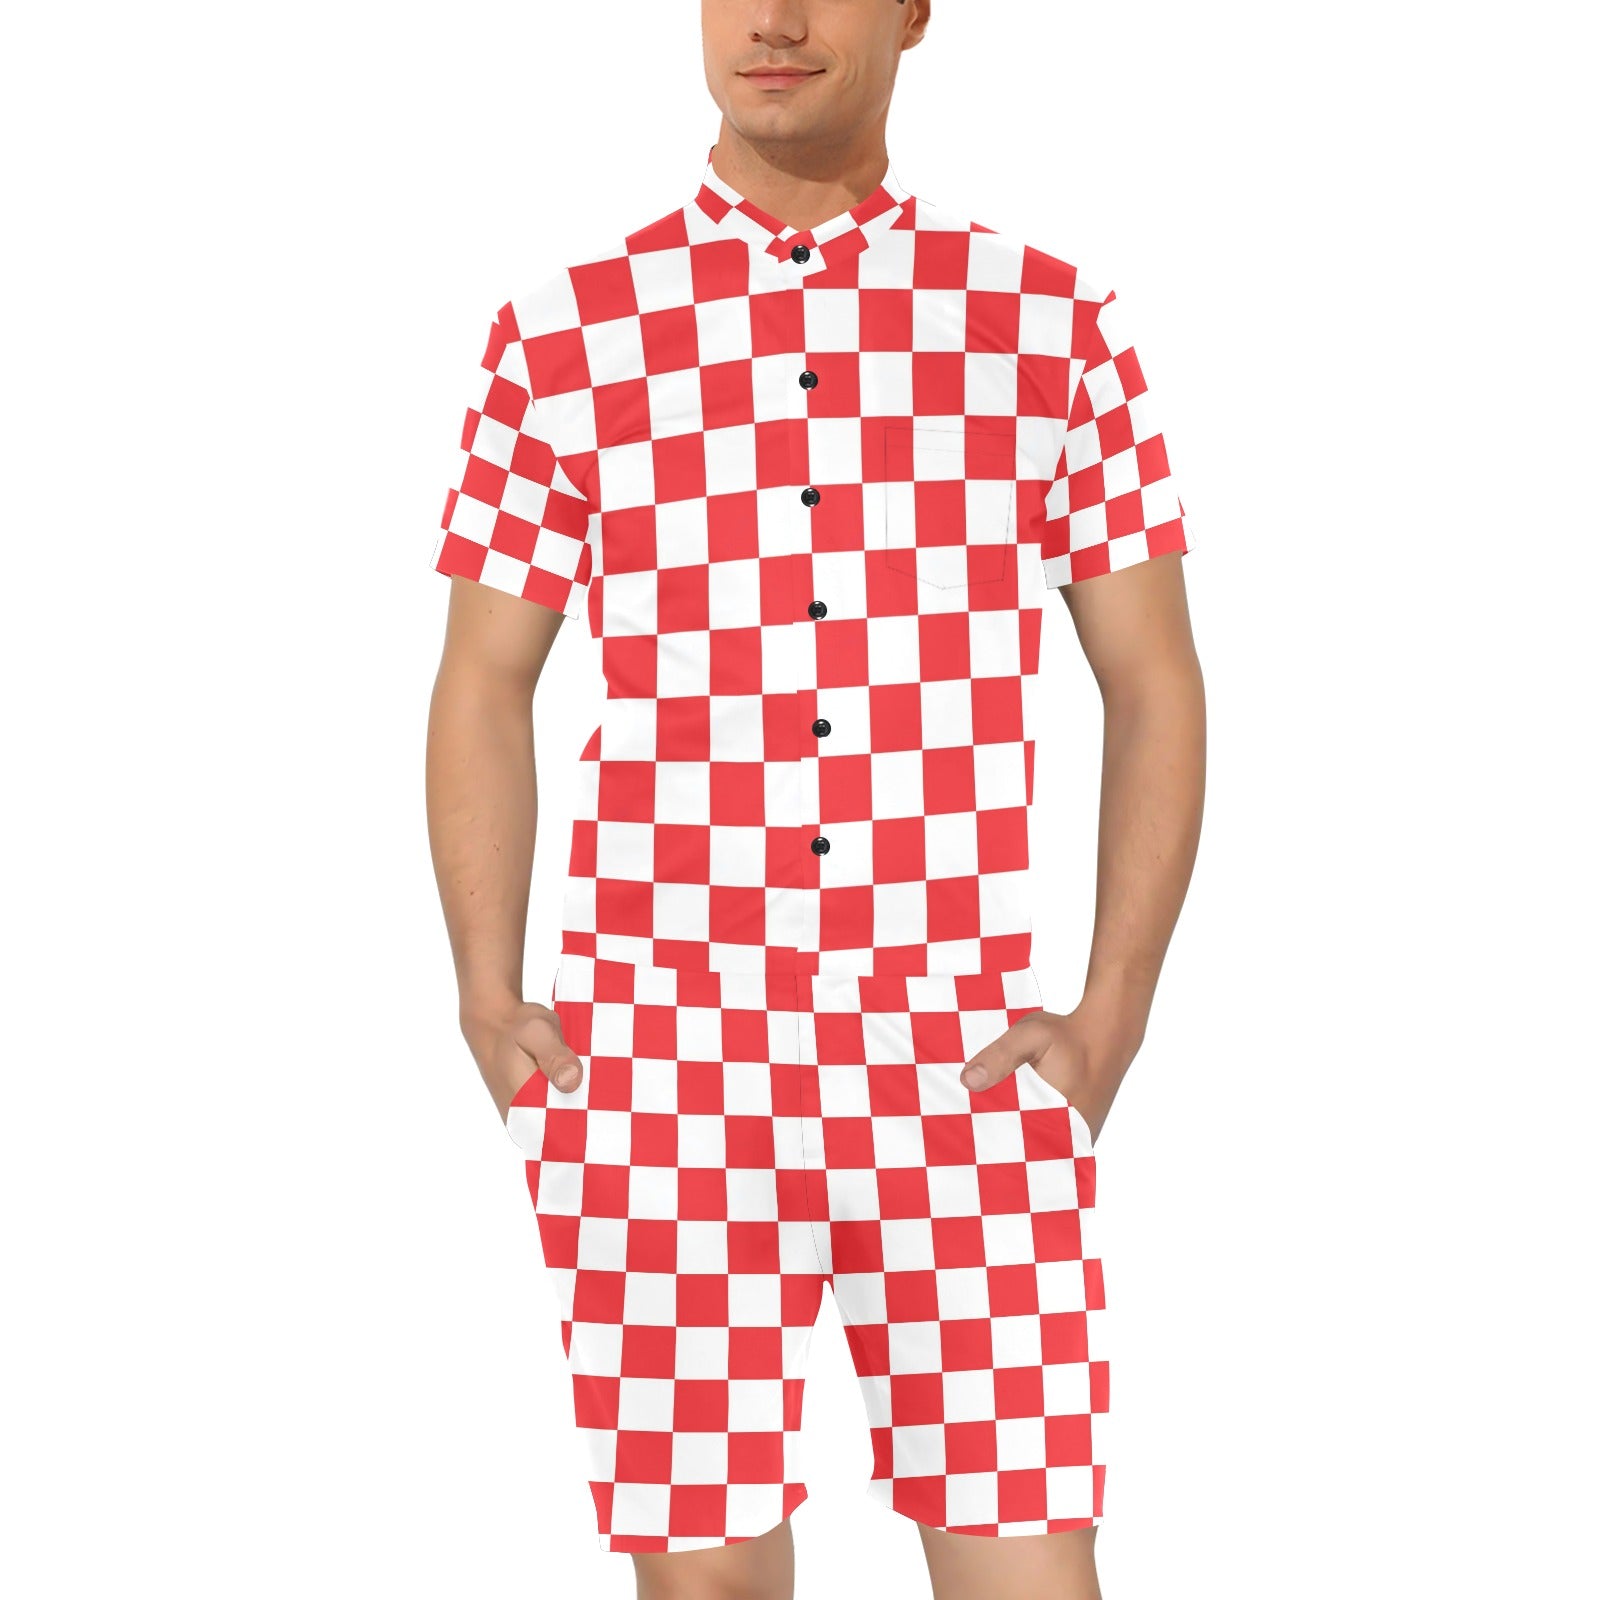 Checkered Red Pattern Print Design 04 Men's Romper